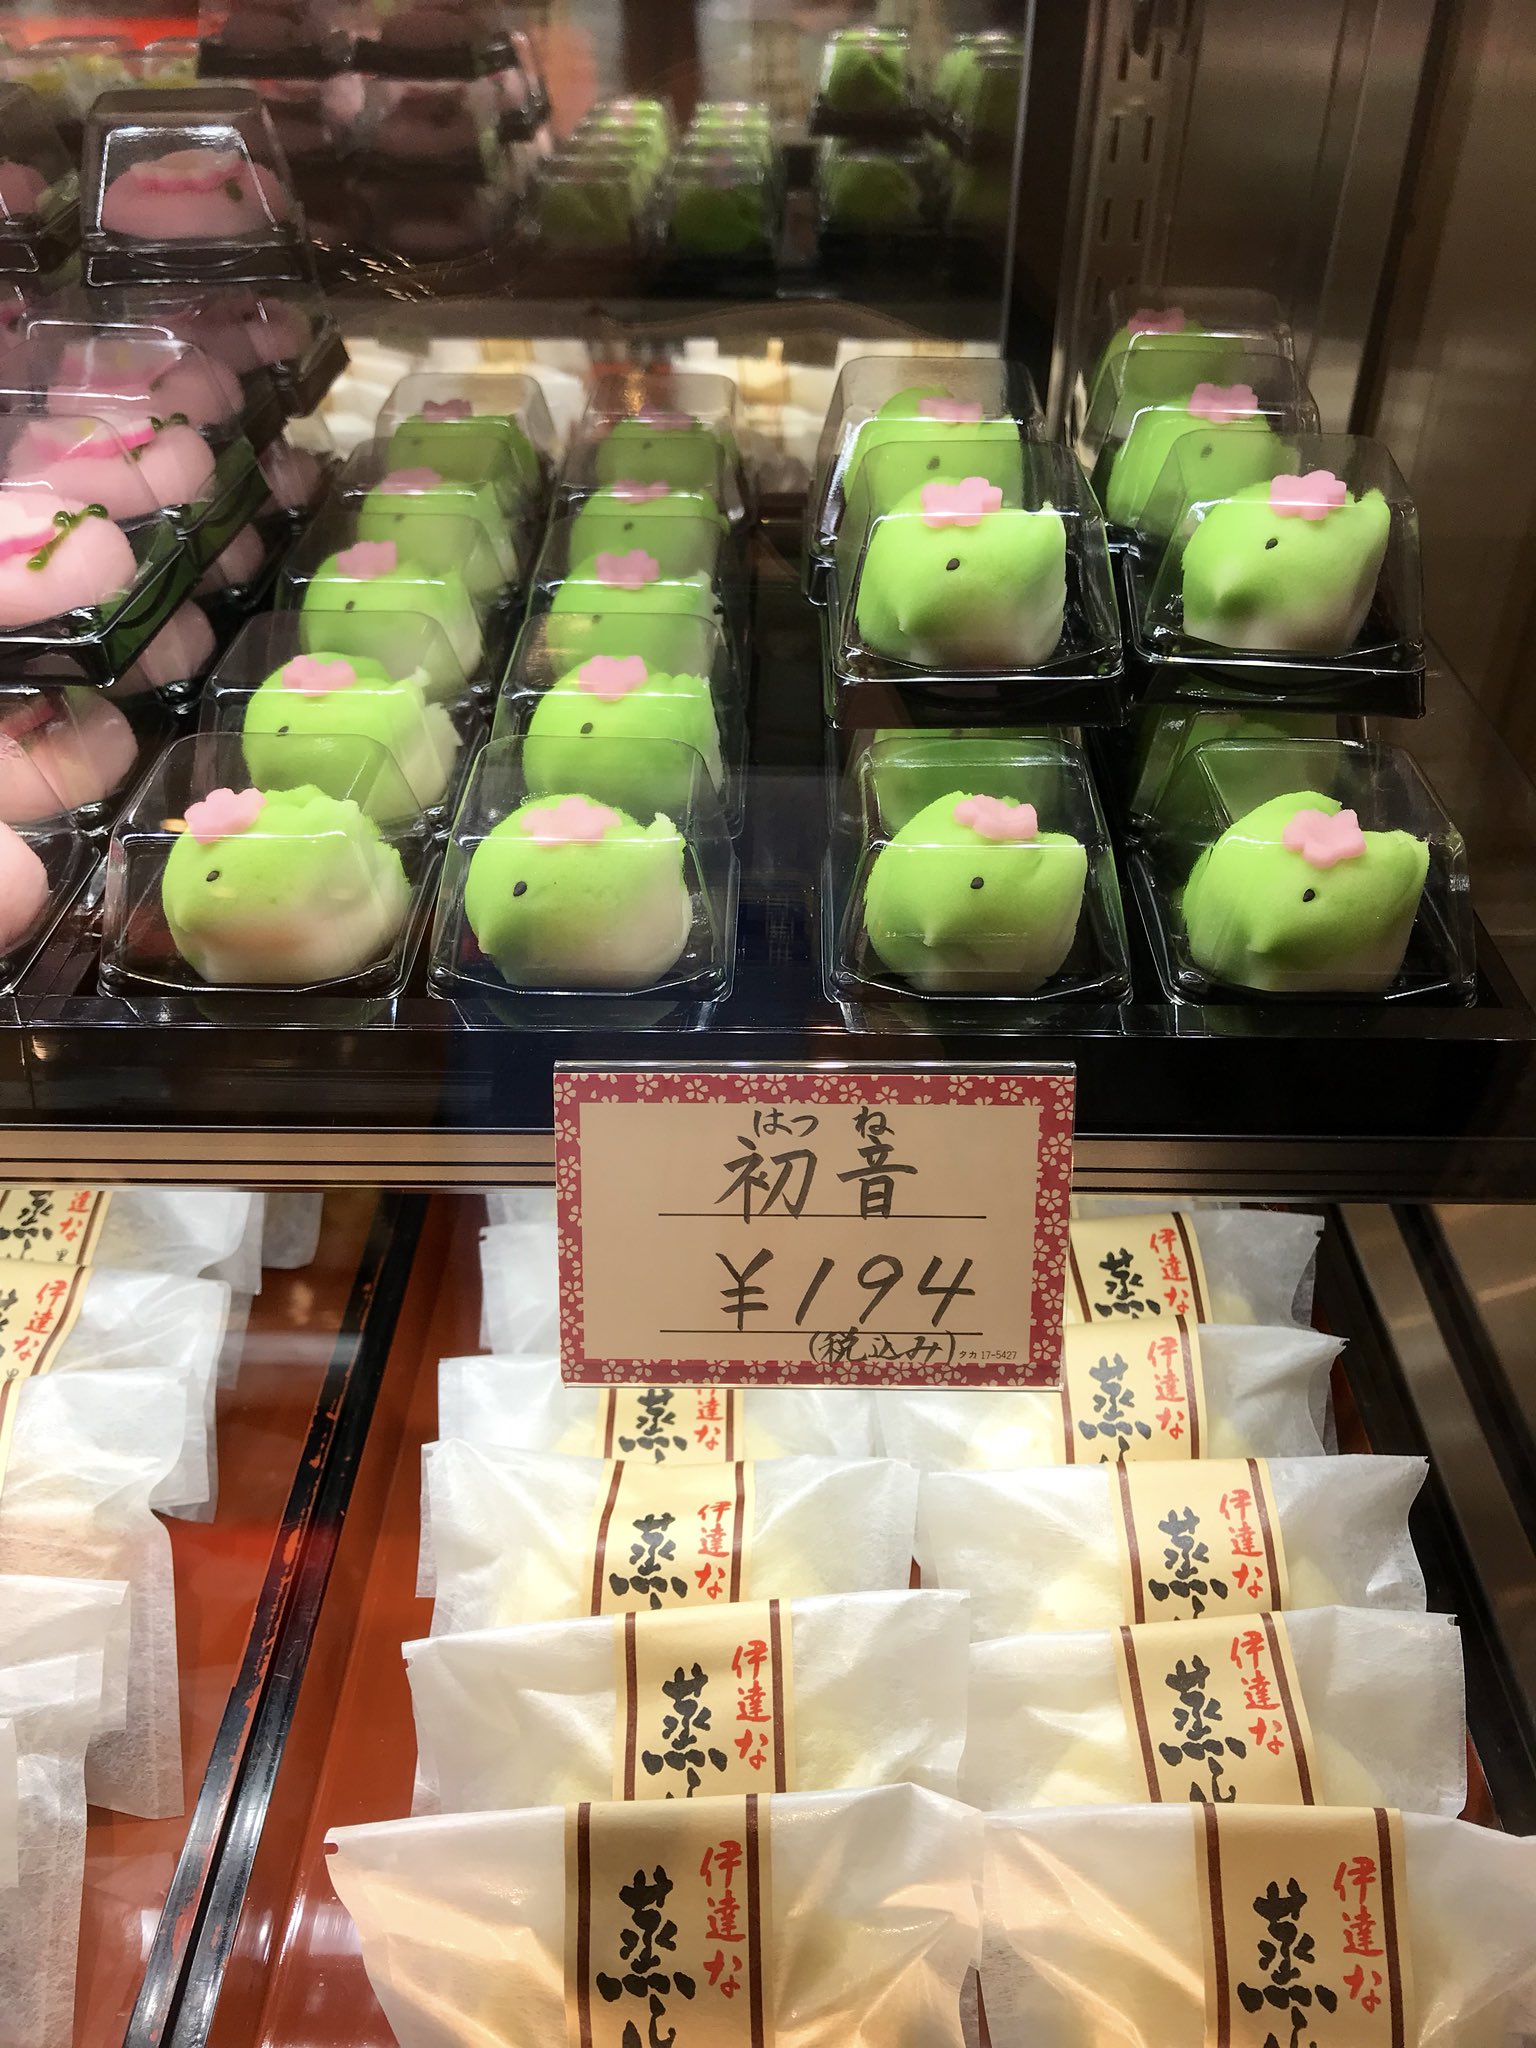 Tdn 仙台駅で 初音 って名前の和菓子見つけた 超かわいい W T Co Mp2paotkyj Twitter